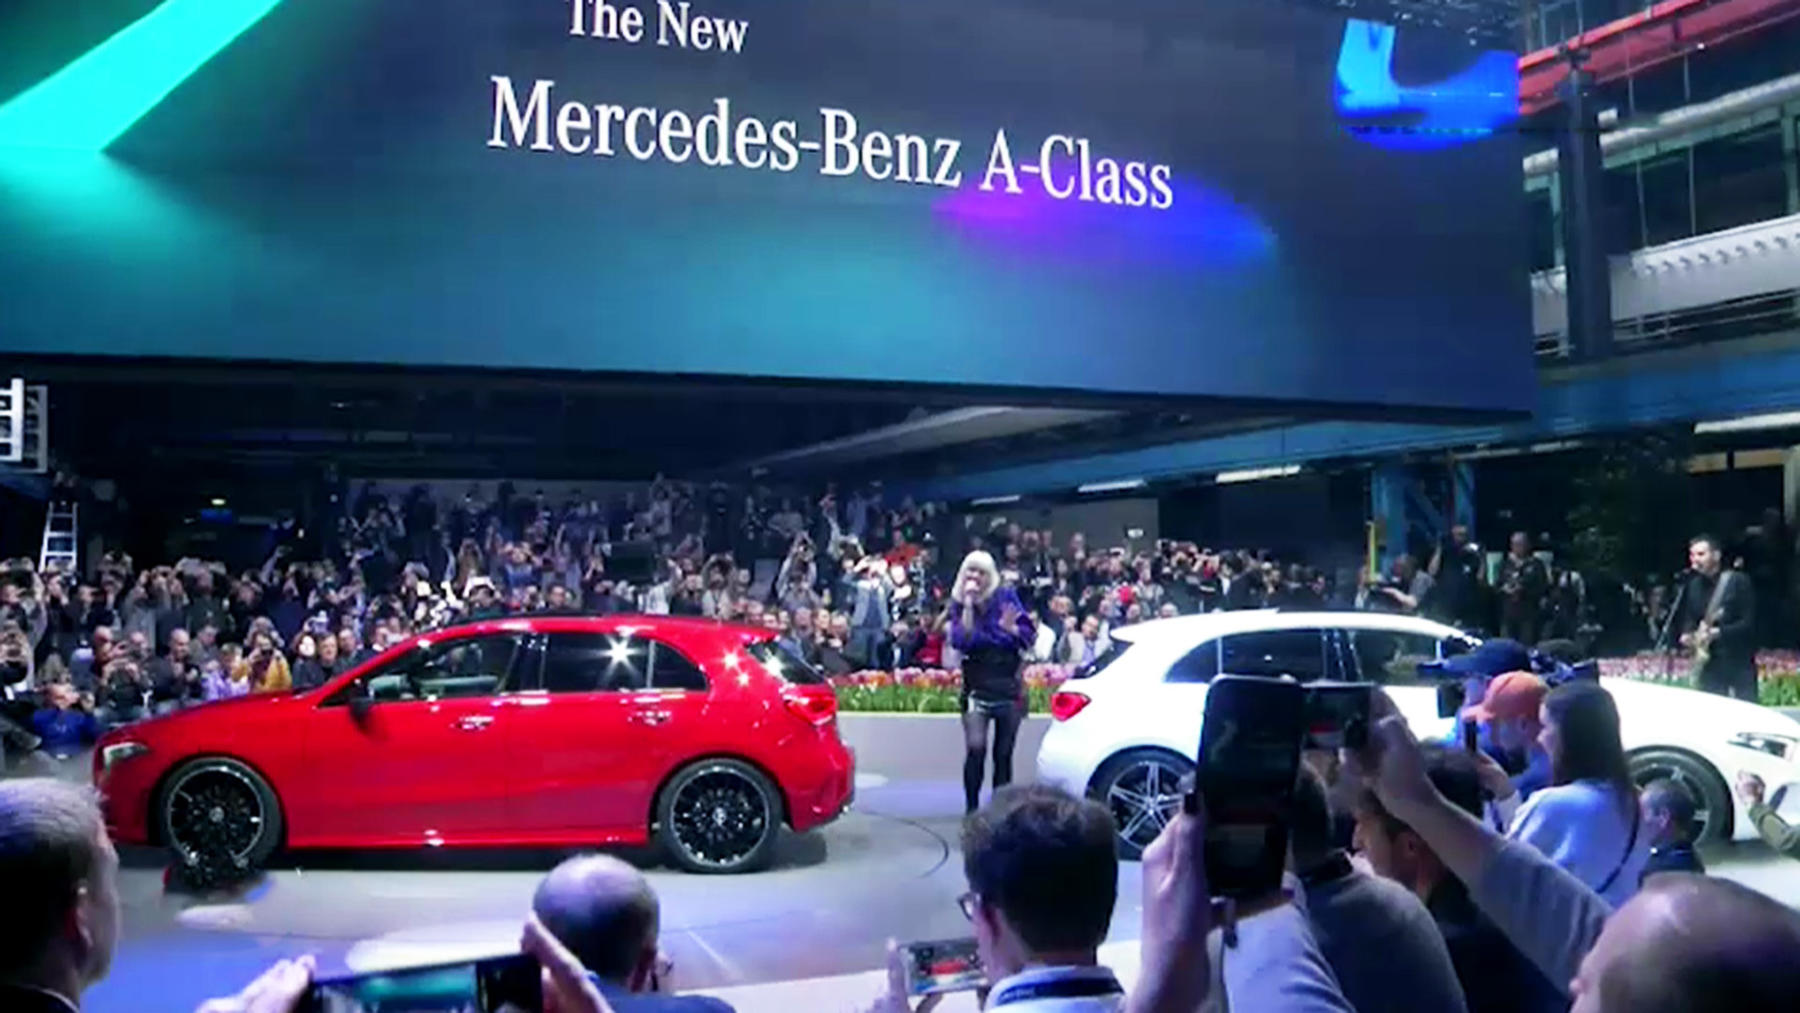 Thema u.a.: Weltpremiere der Mercedes A-Klasse